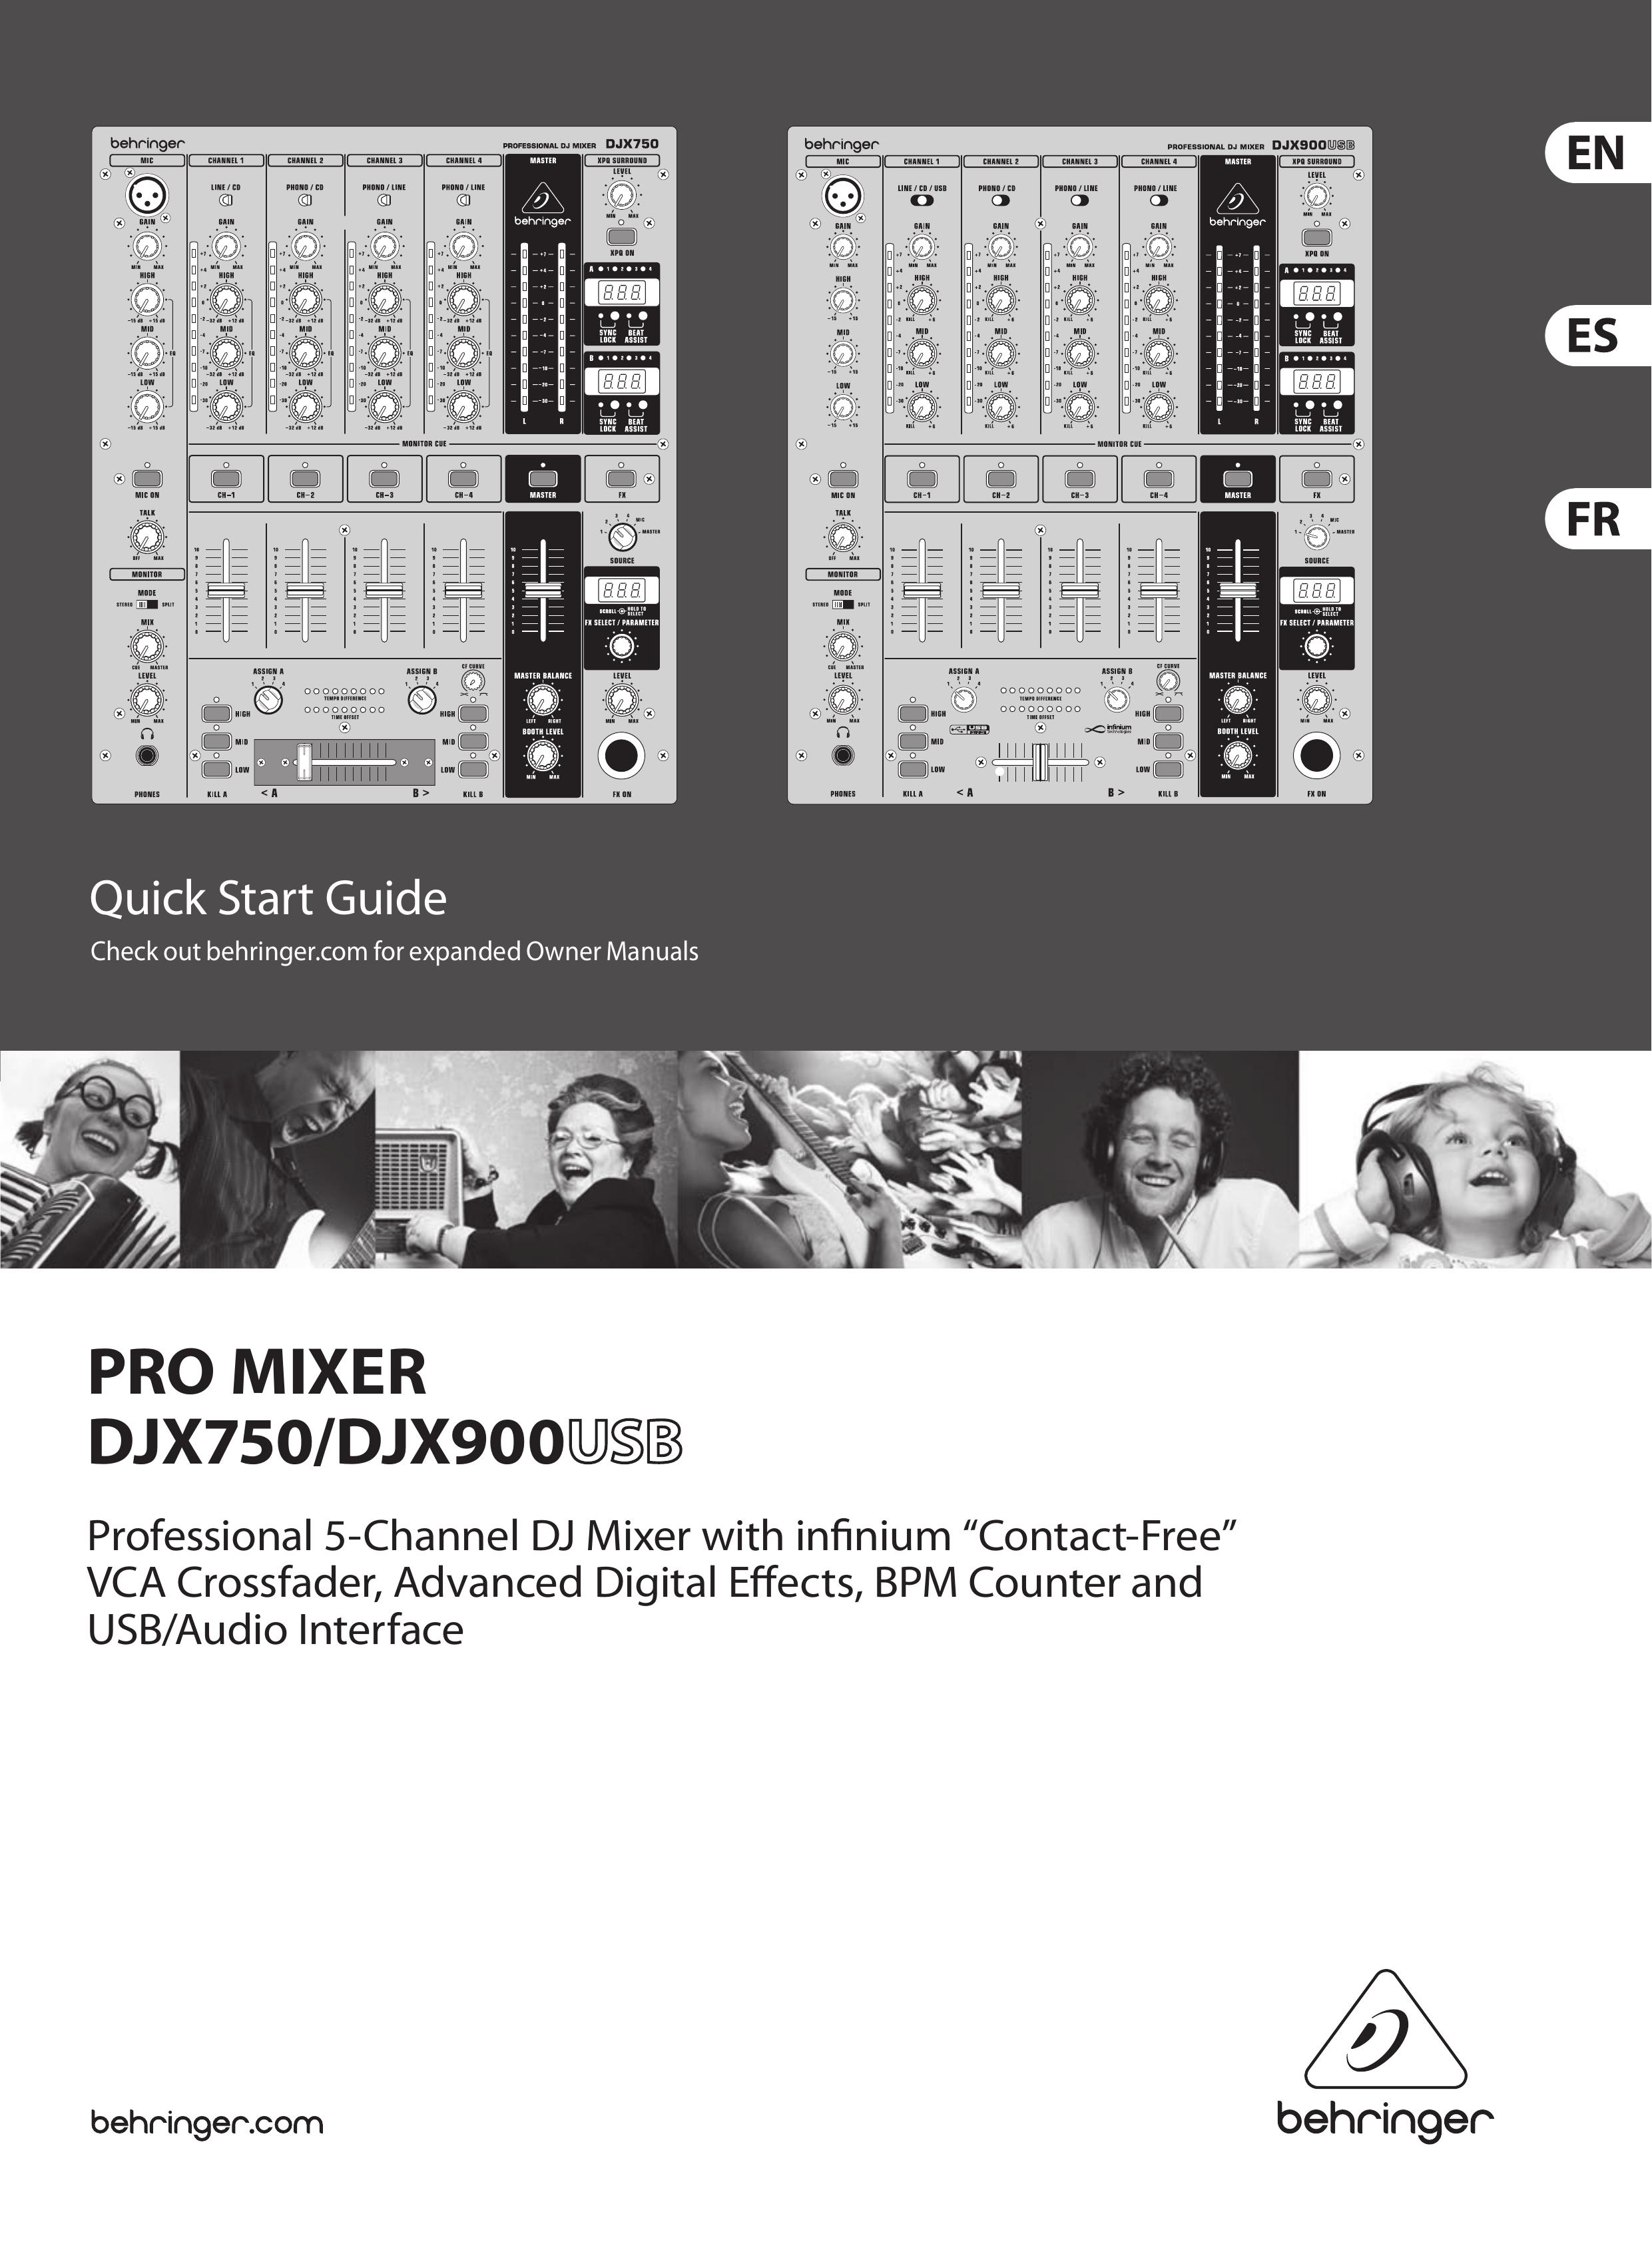 Behringer DJX900 DJ Equipment User Manual